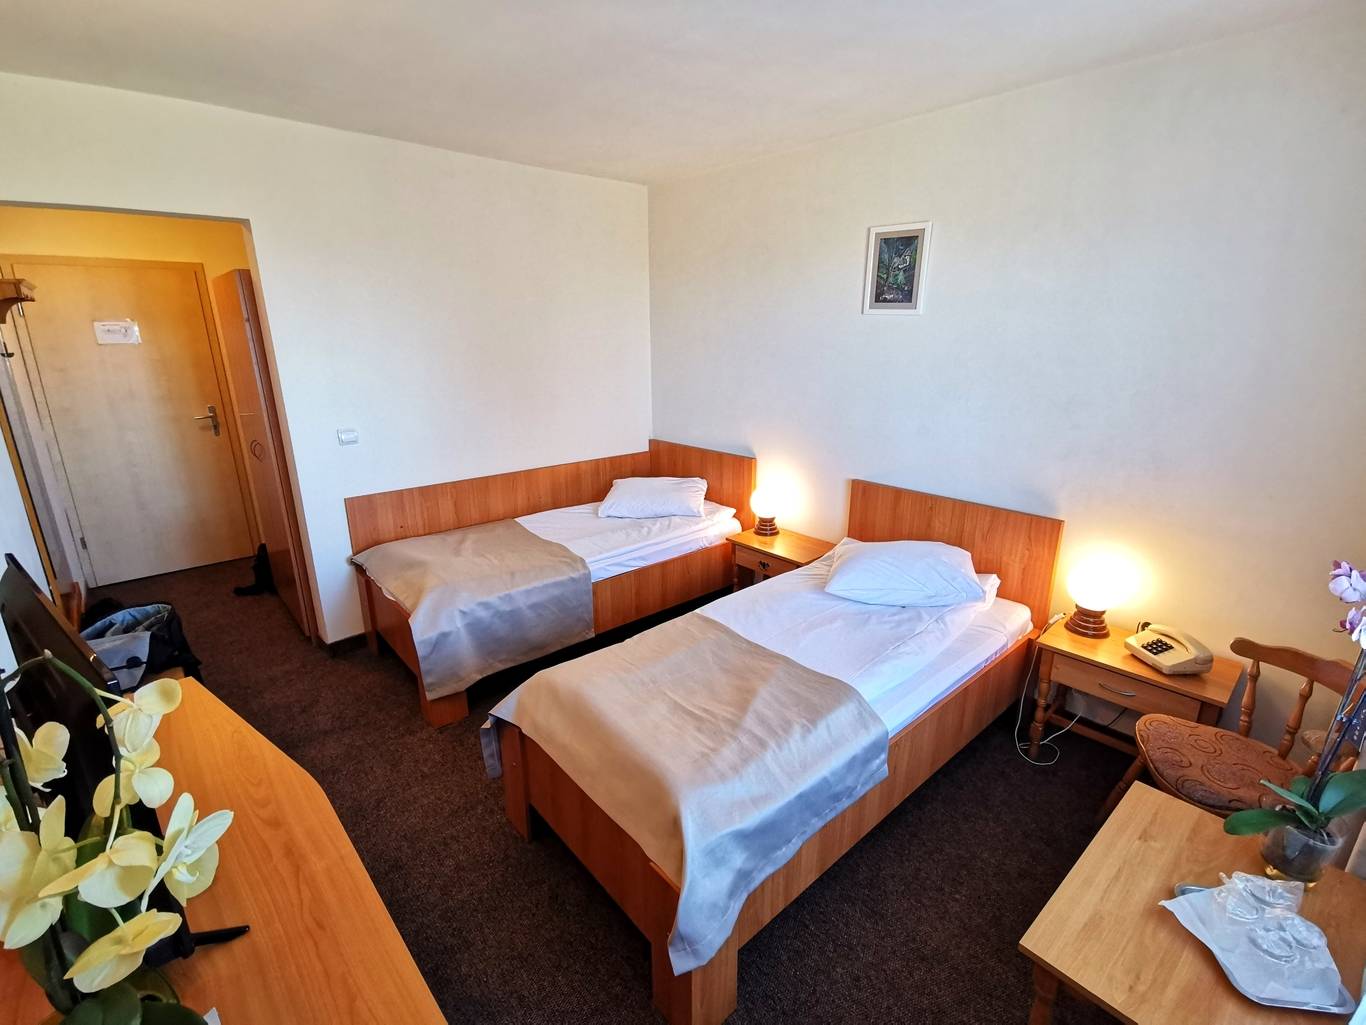 Oferta speciala Relaxare si tratament 2023 Covasna Hotel Montana